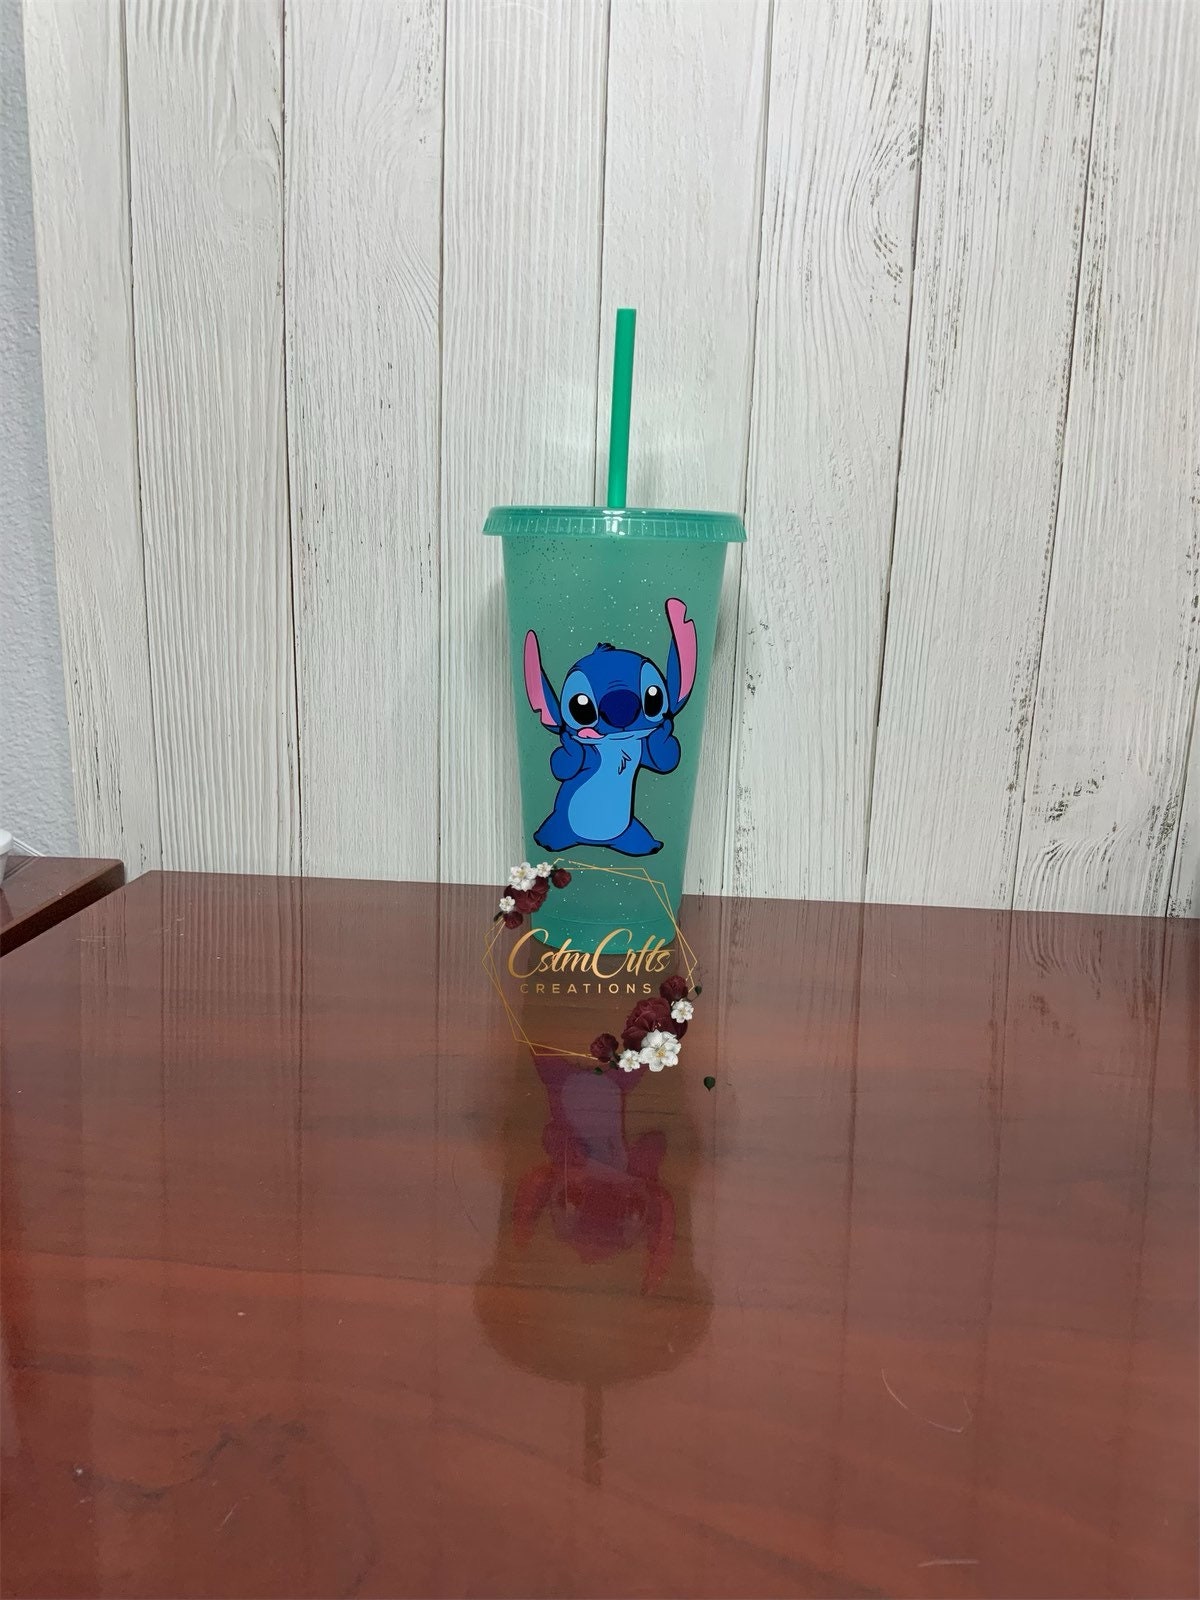 Stitch Inspired Starbucks Cup, Lilo and Stich, Disney 